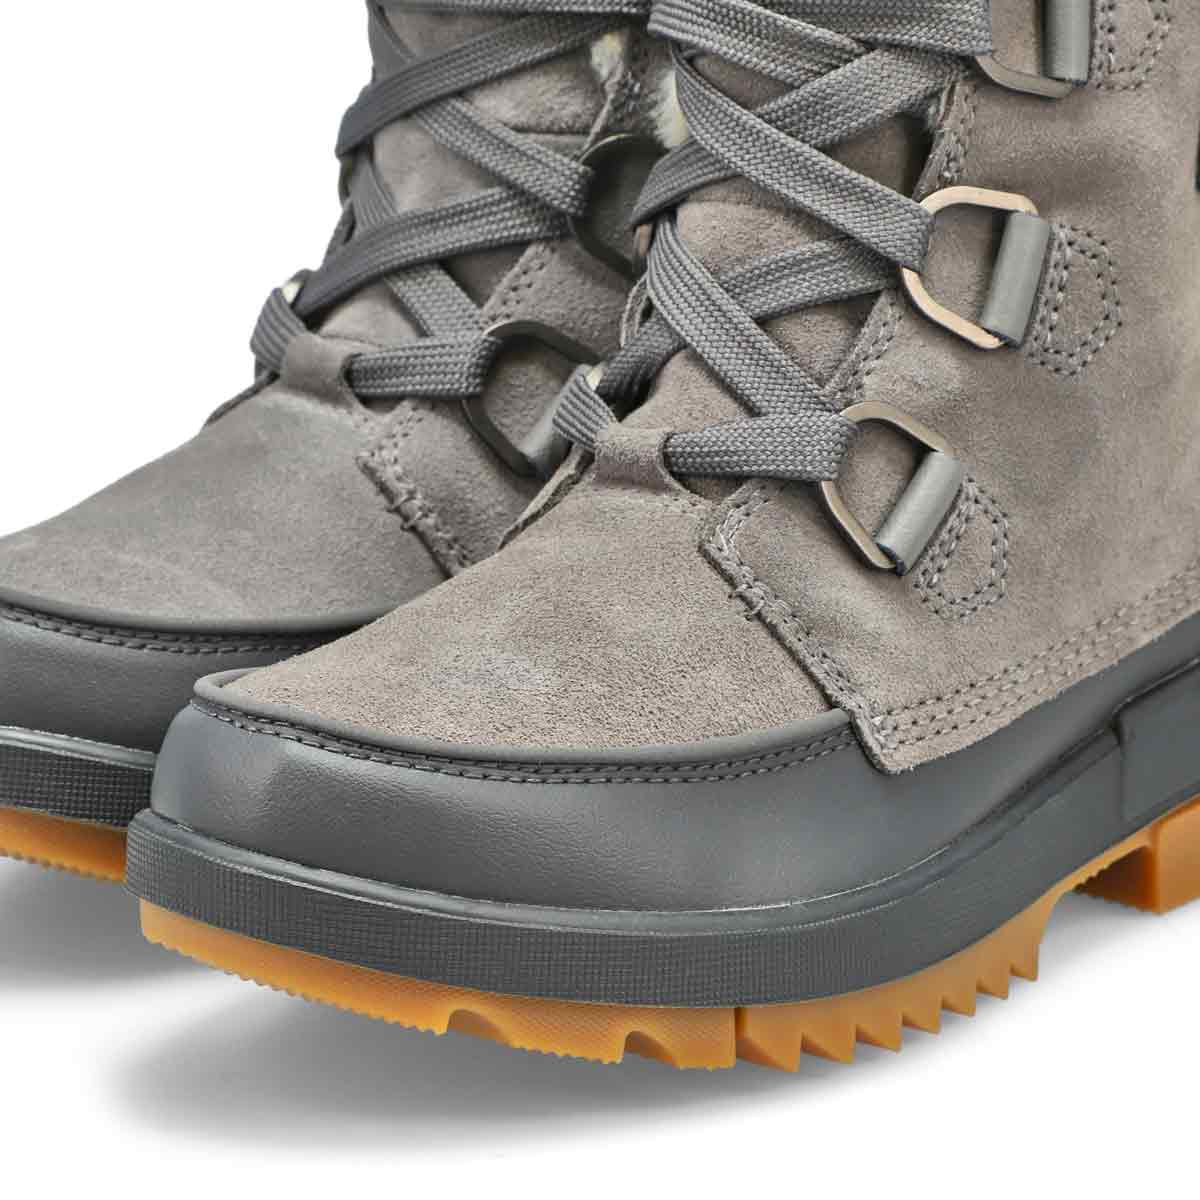 Women's TIVOLI IV quarry waterproof boots